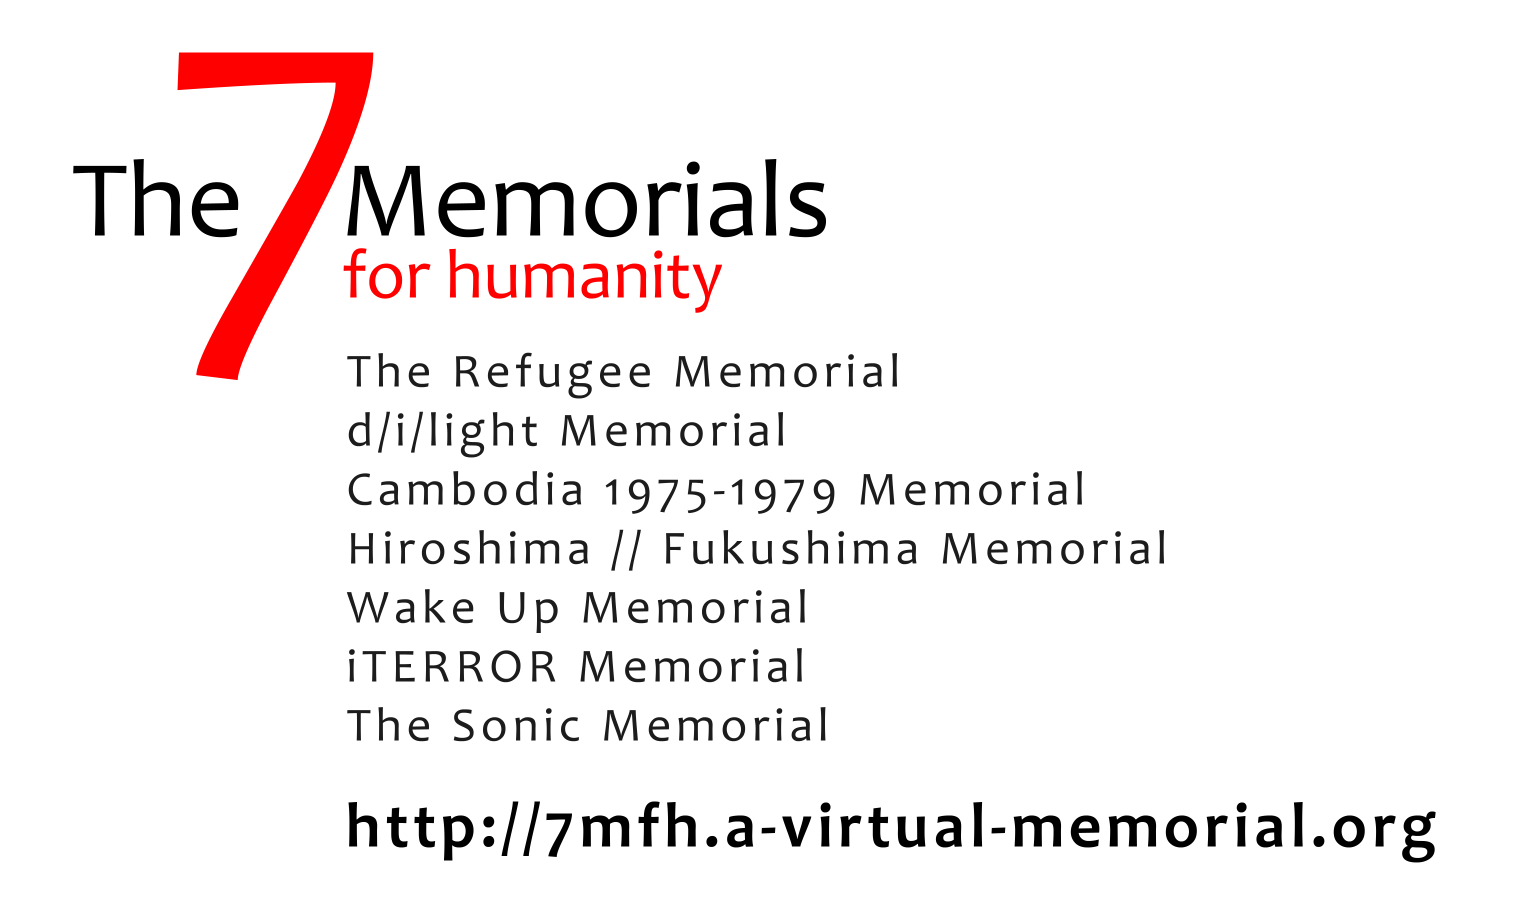 The 7 Memorials – new URL